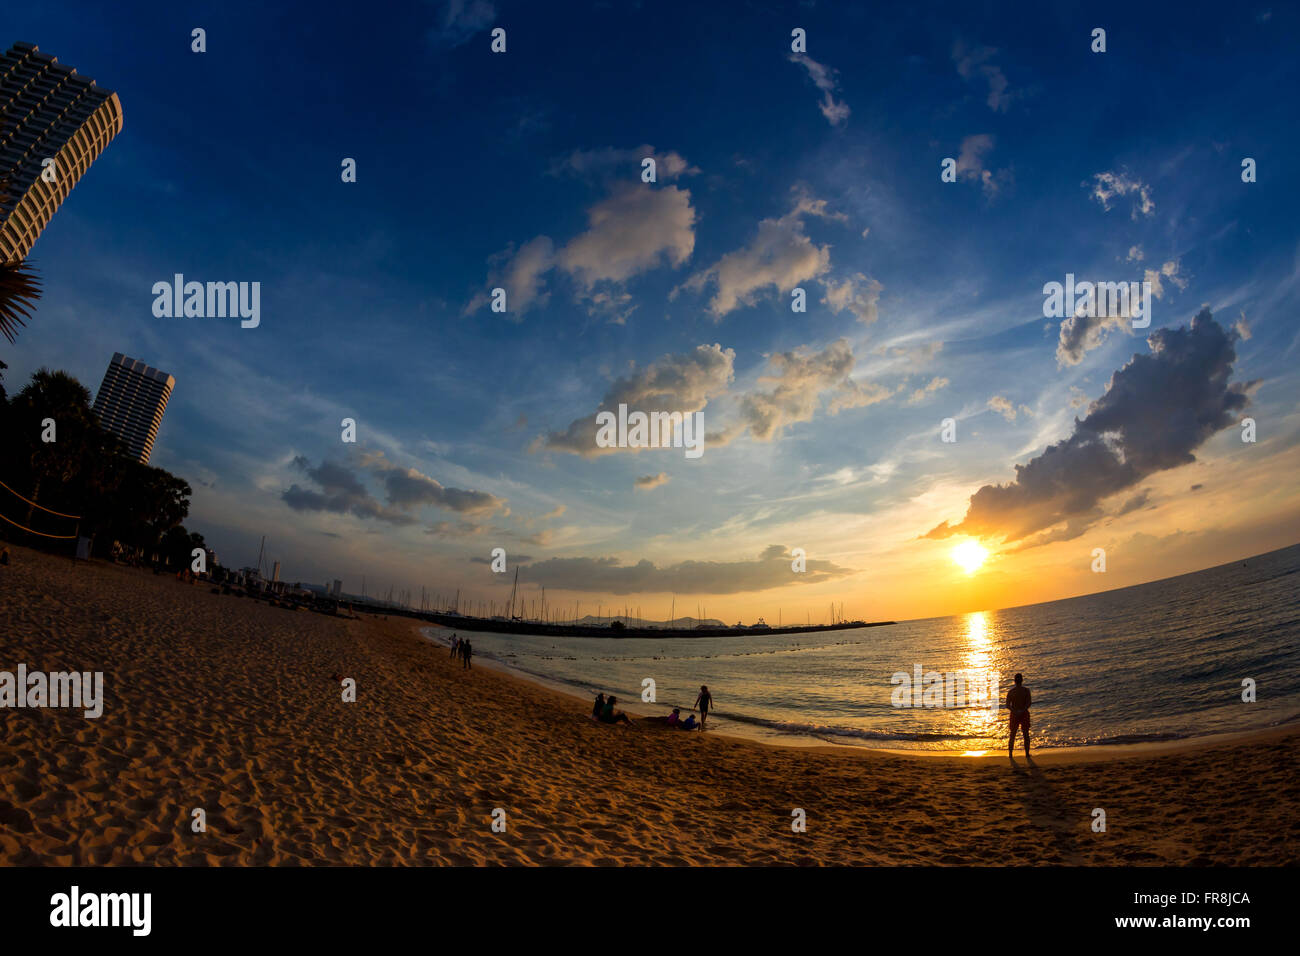 Spiaggia tropicale al tramonto, Pattaya Beach, Thailandia, vista fisheye Foto Stock